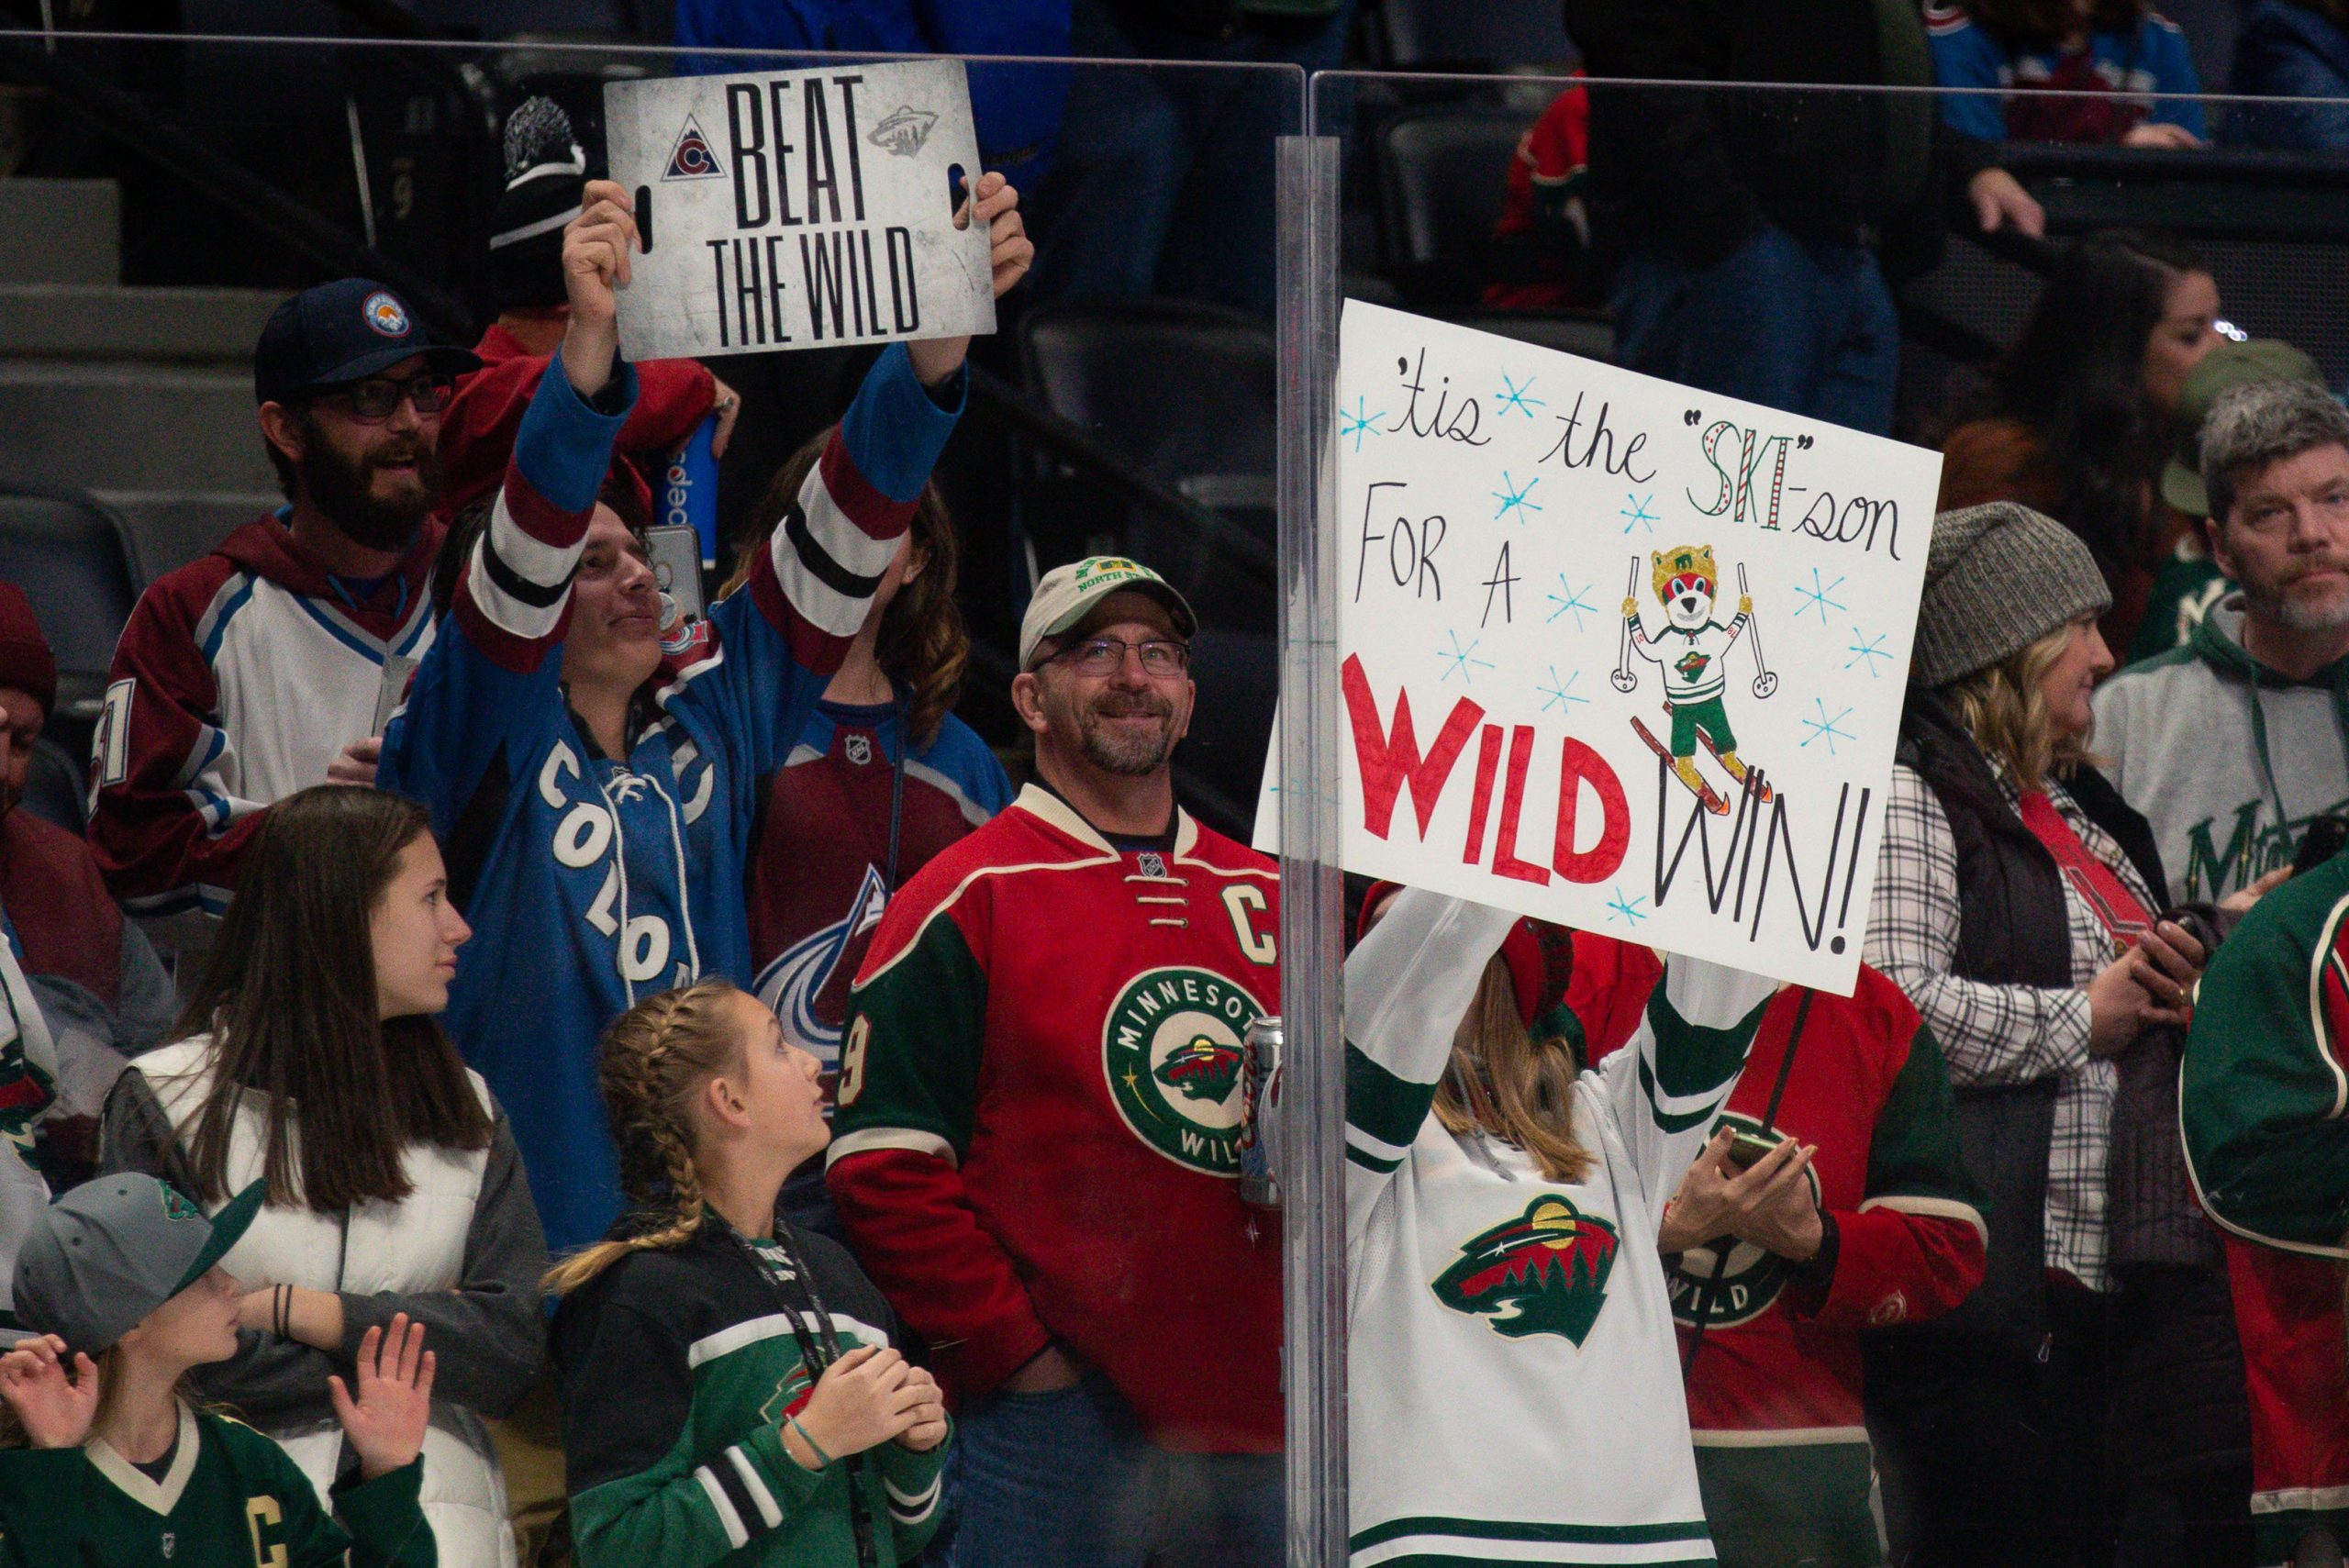 Fans, Minnesota Wild